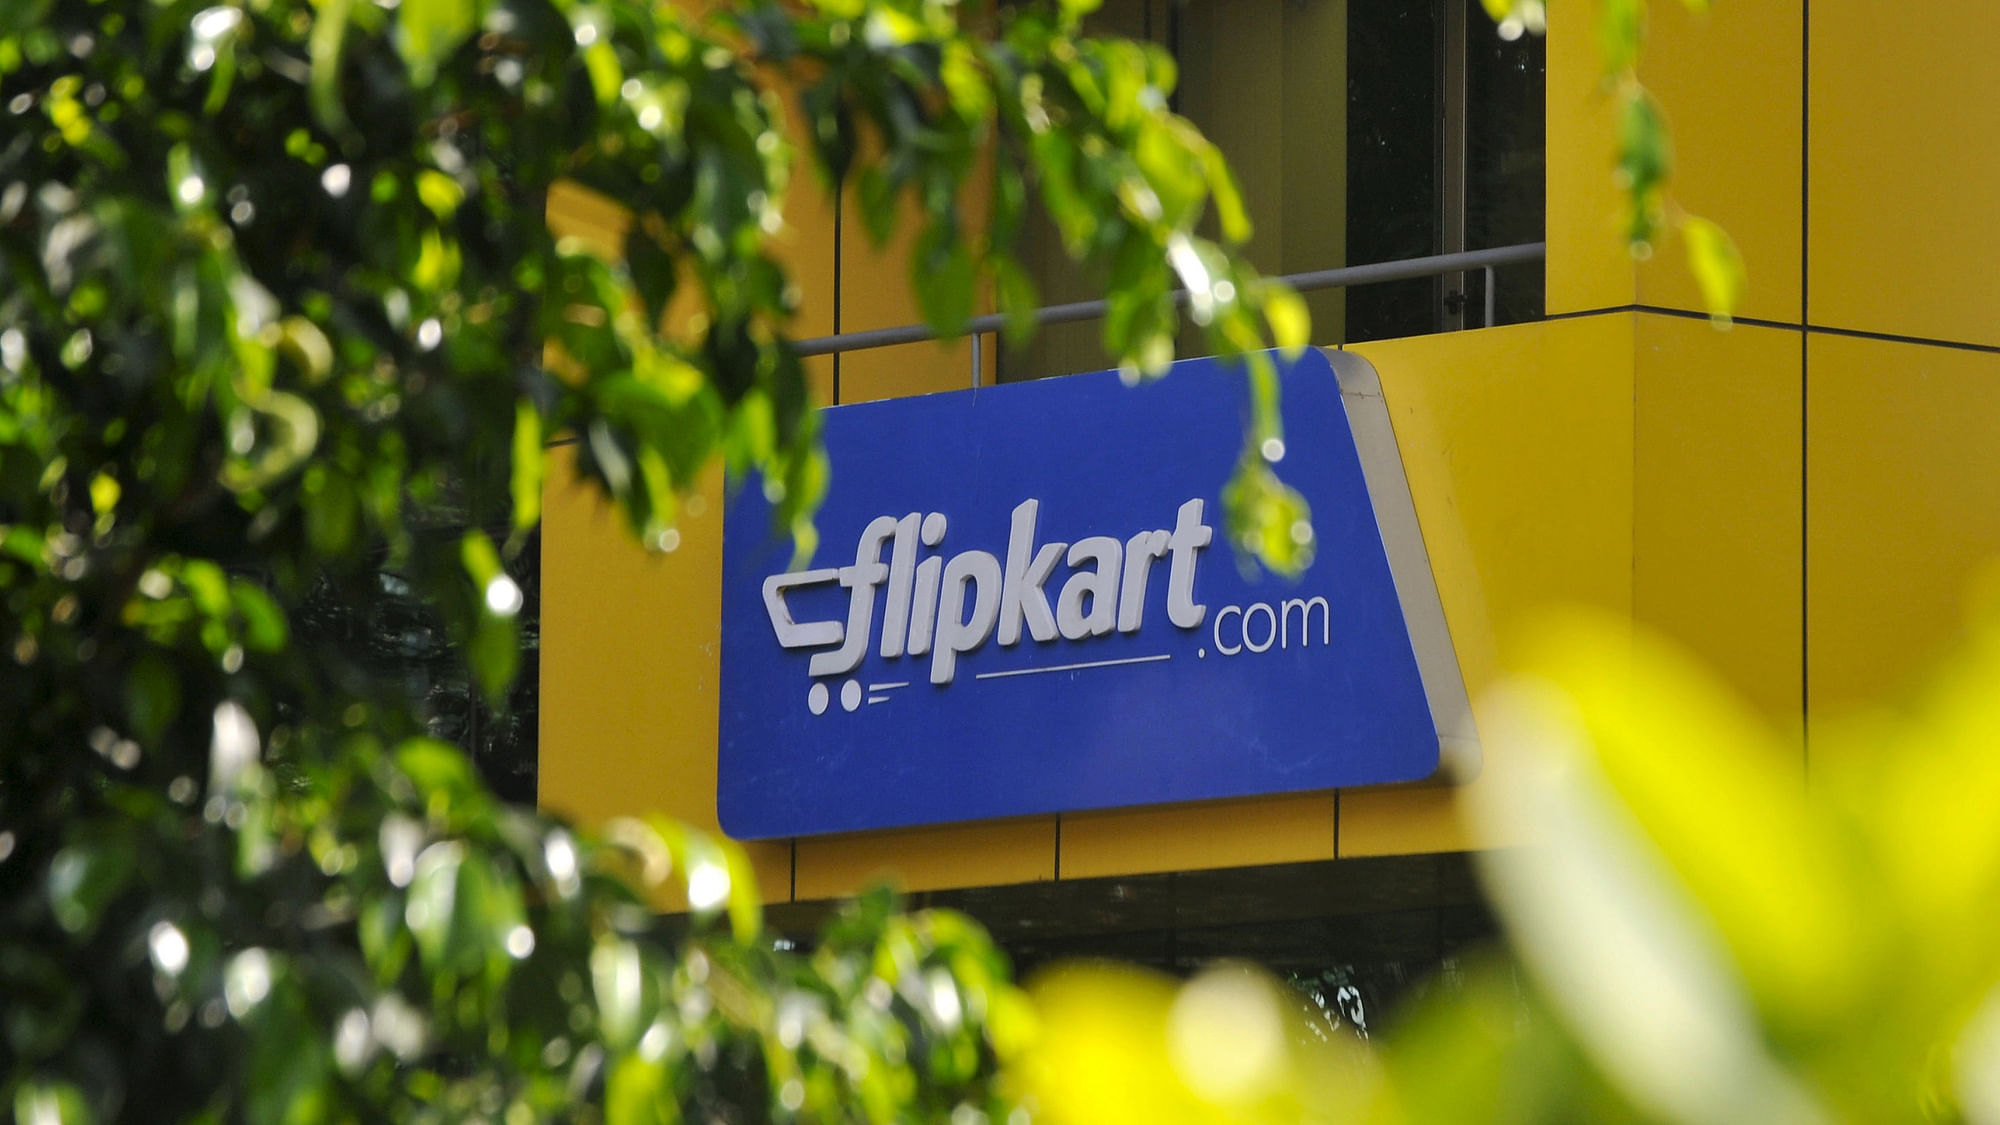 The stolen phones were allegedly sold through Flipkart’s website. (Photo: Reuters)